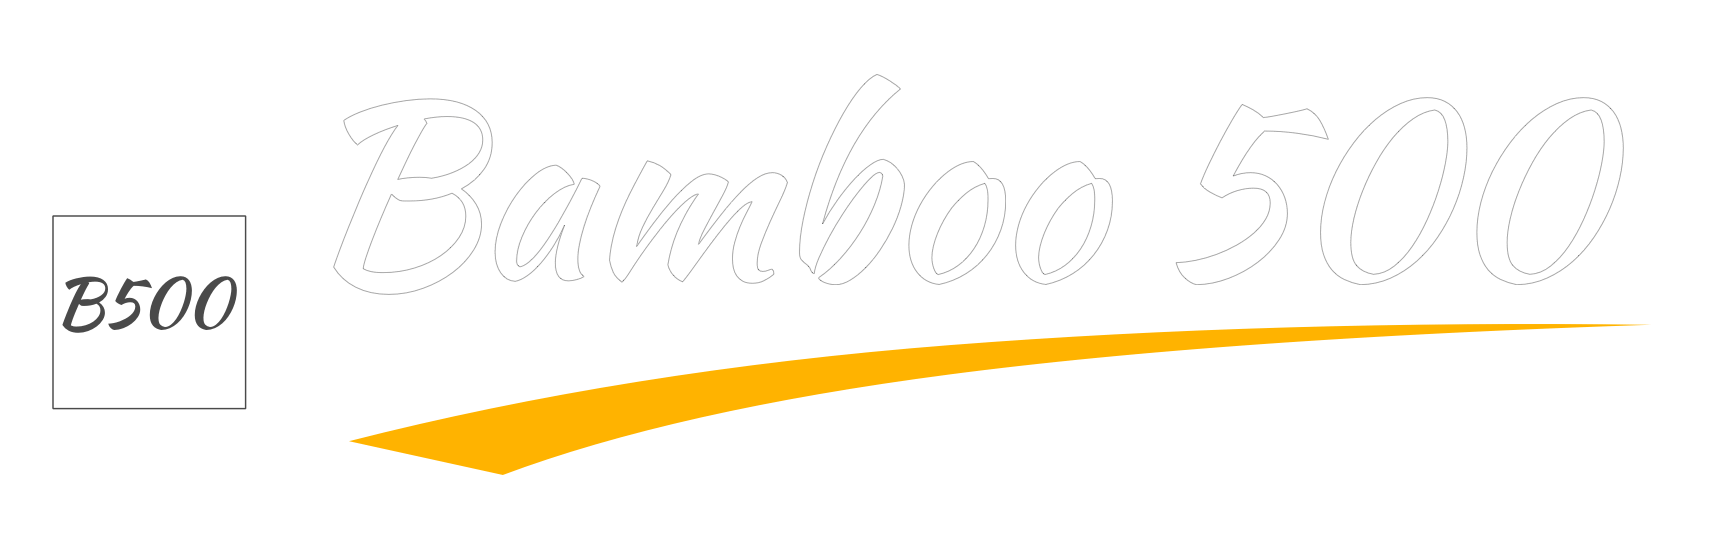 Bamboo 500